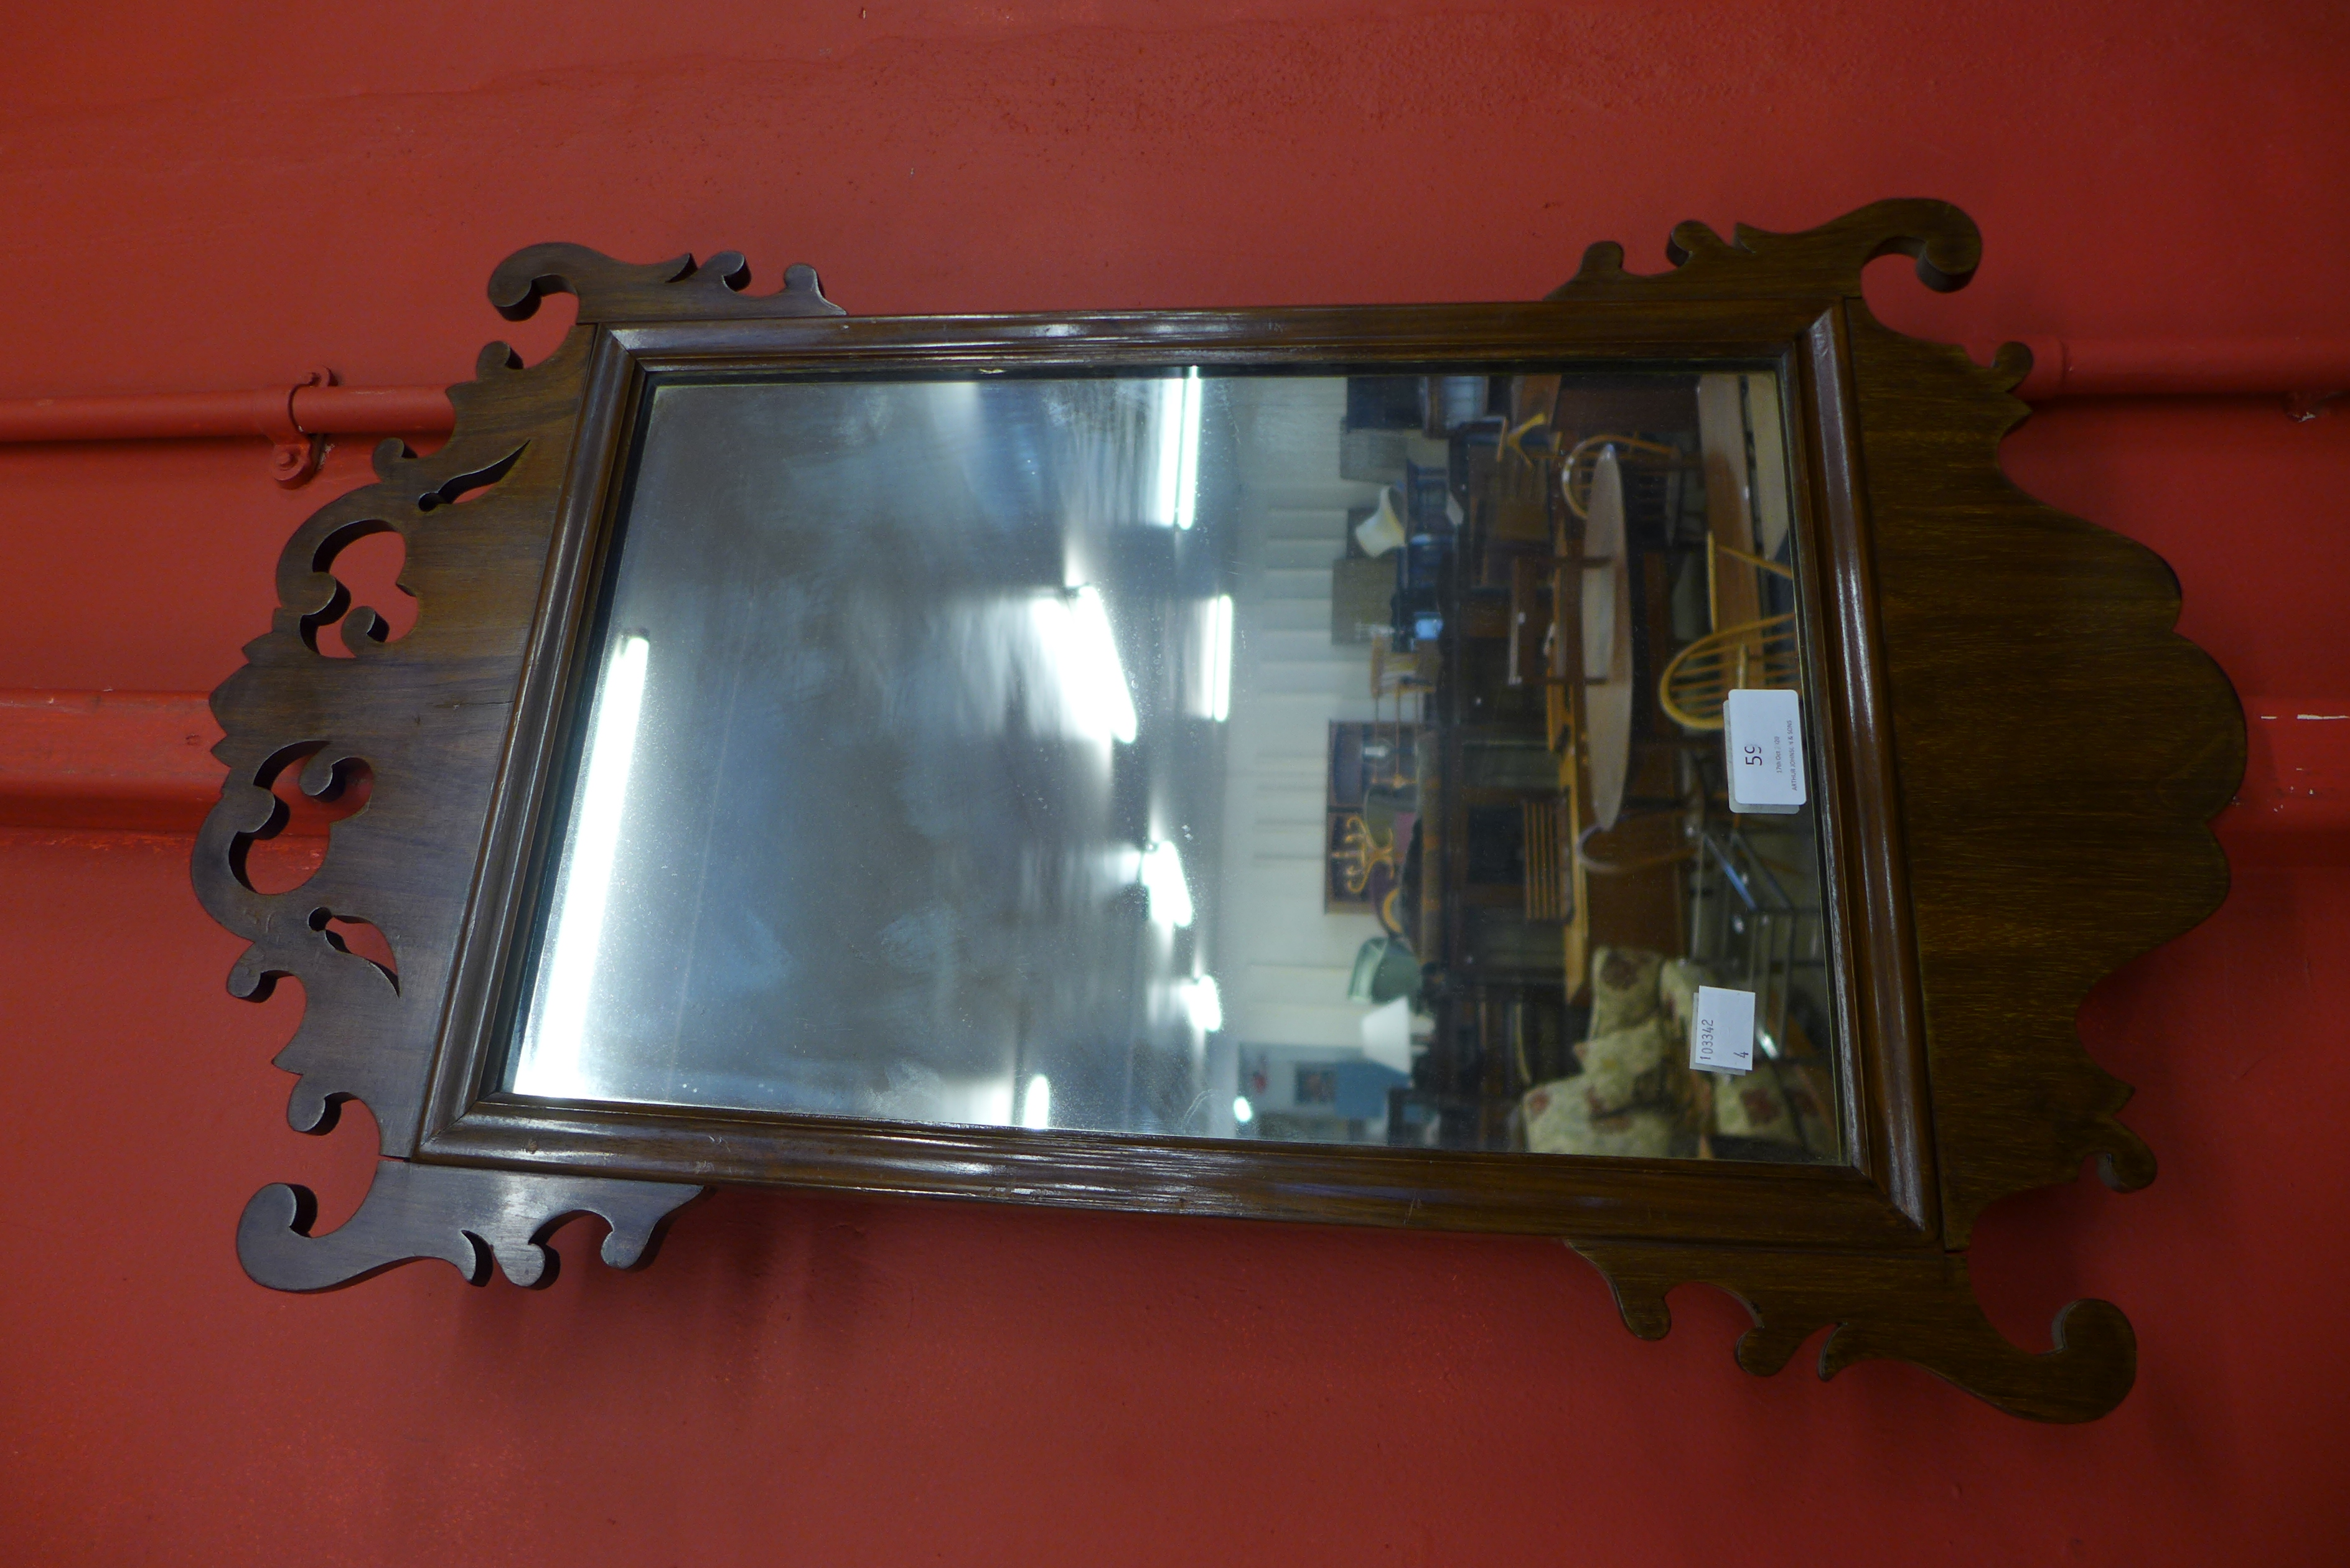 A George II style mahogany mirror